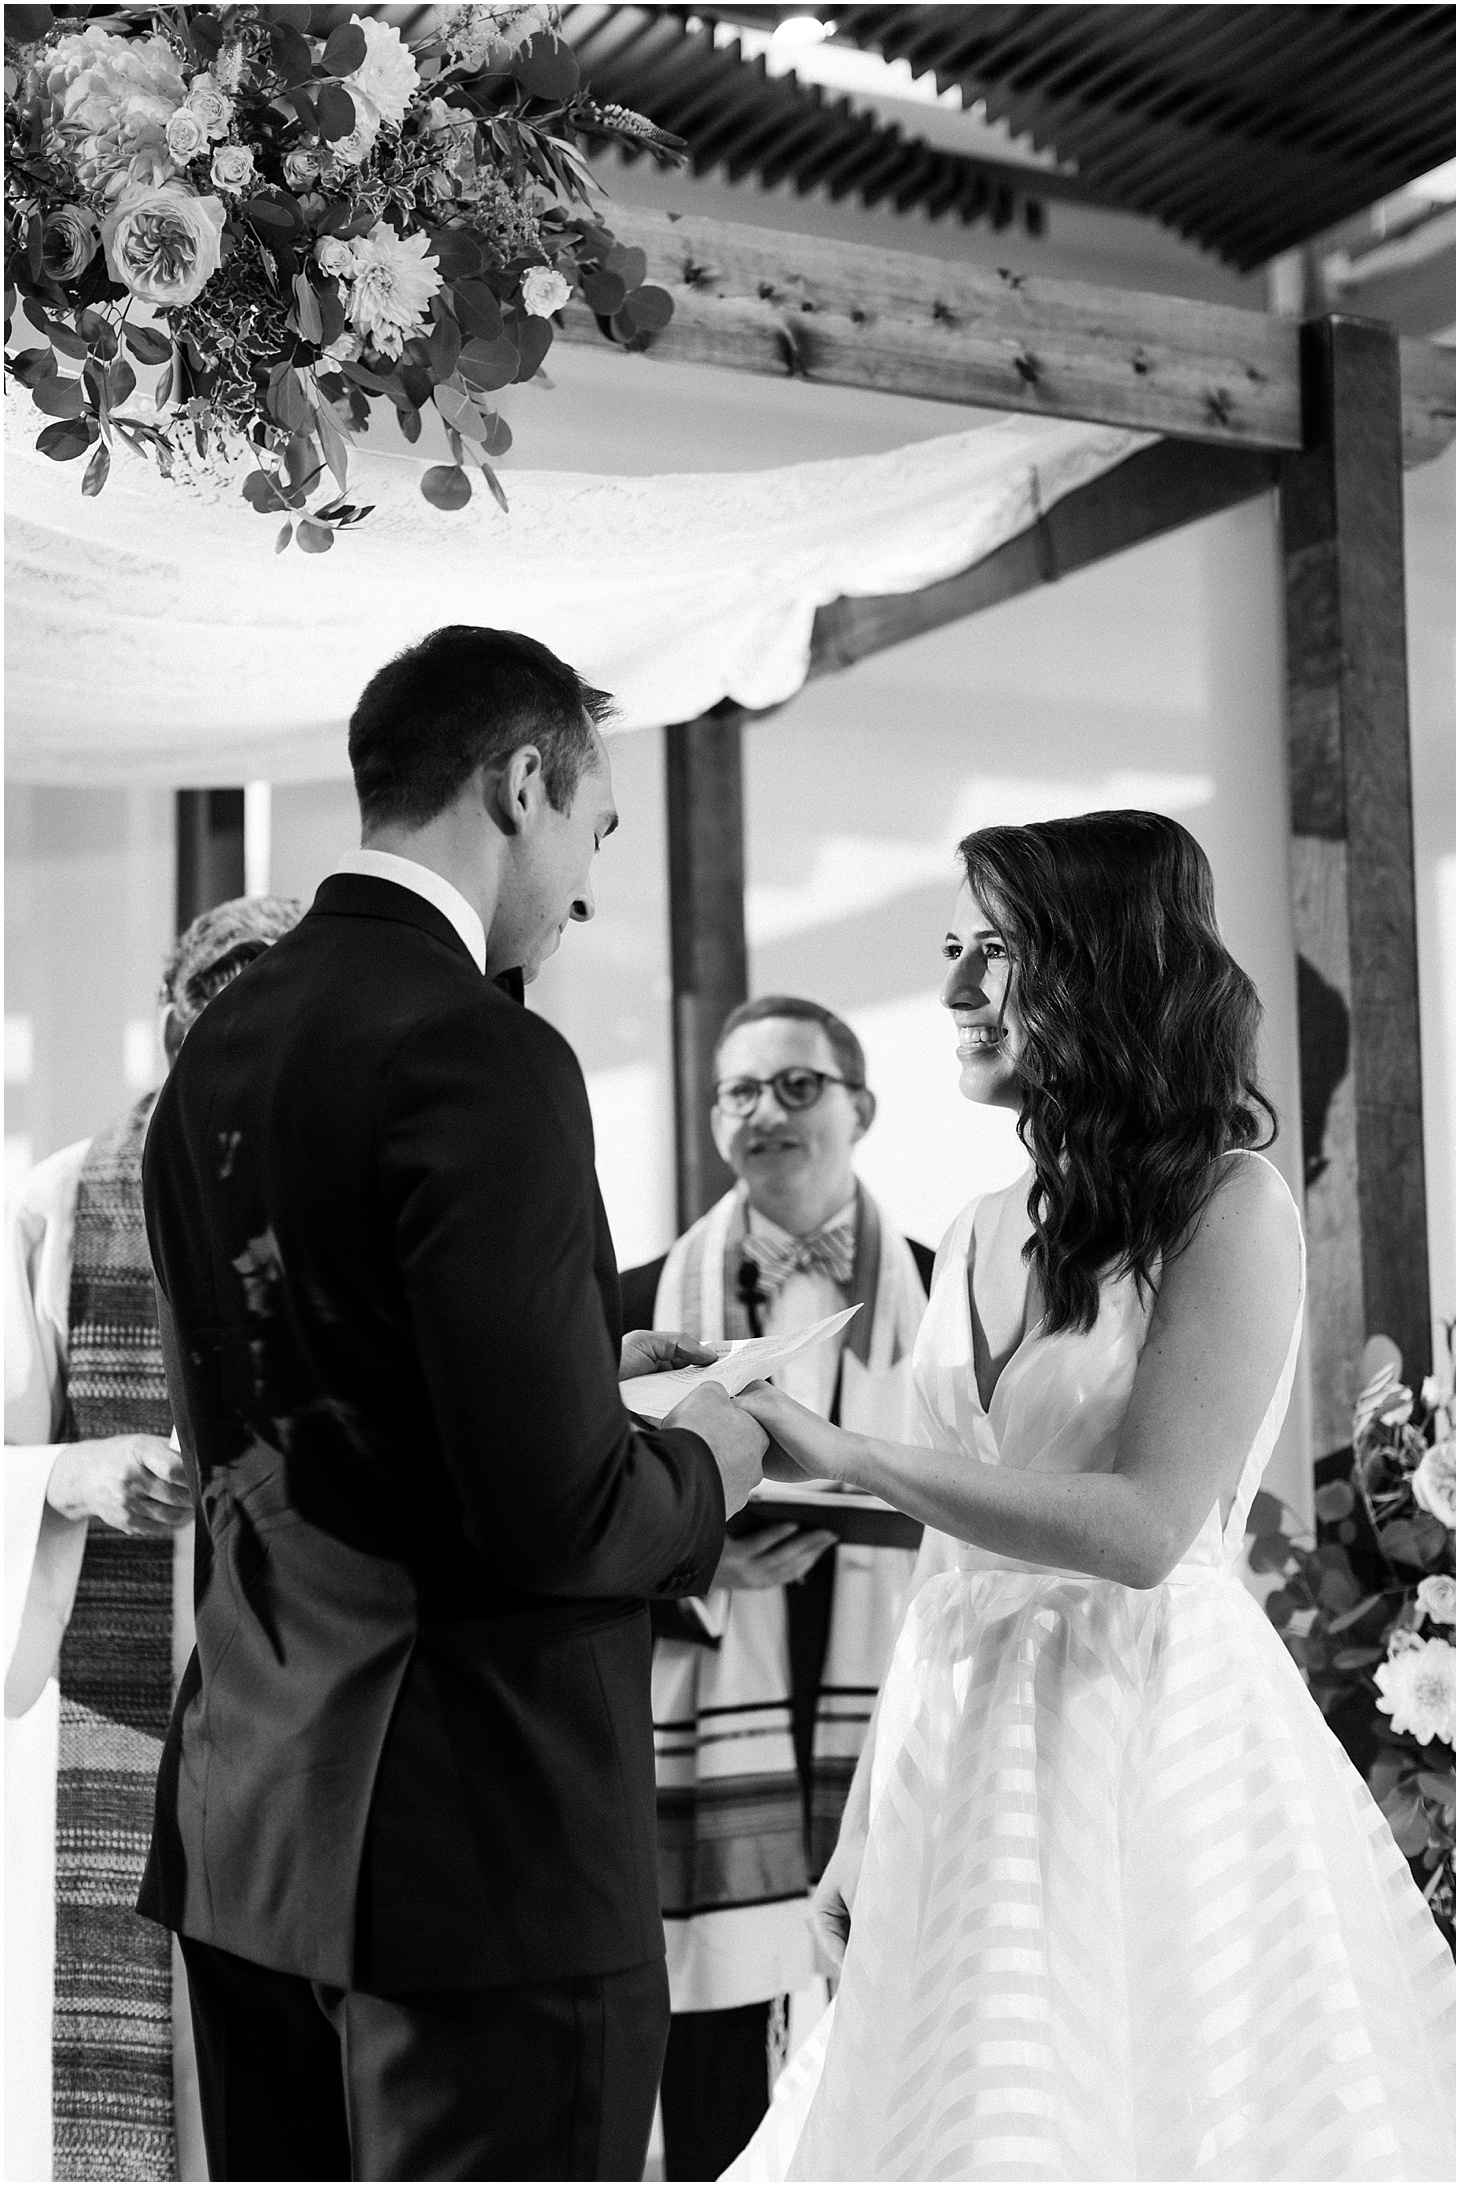 Wedding Ceremony at District Winery | Chic and Modern Interfaith Wedding in Washington, DC | Sarah Bradshaw Photography